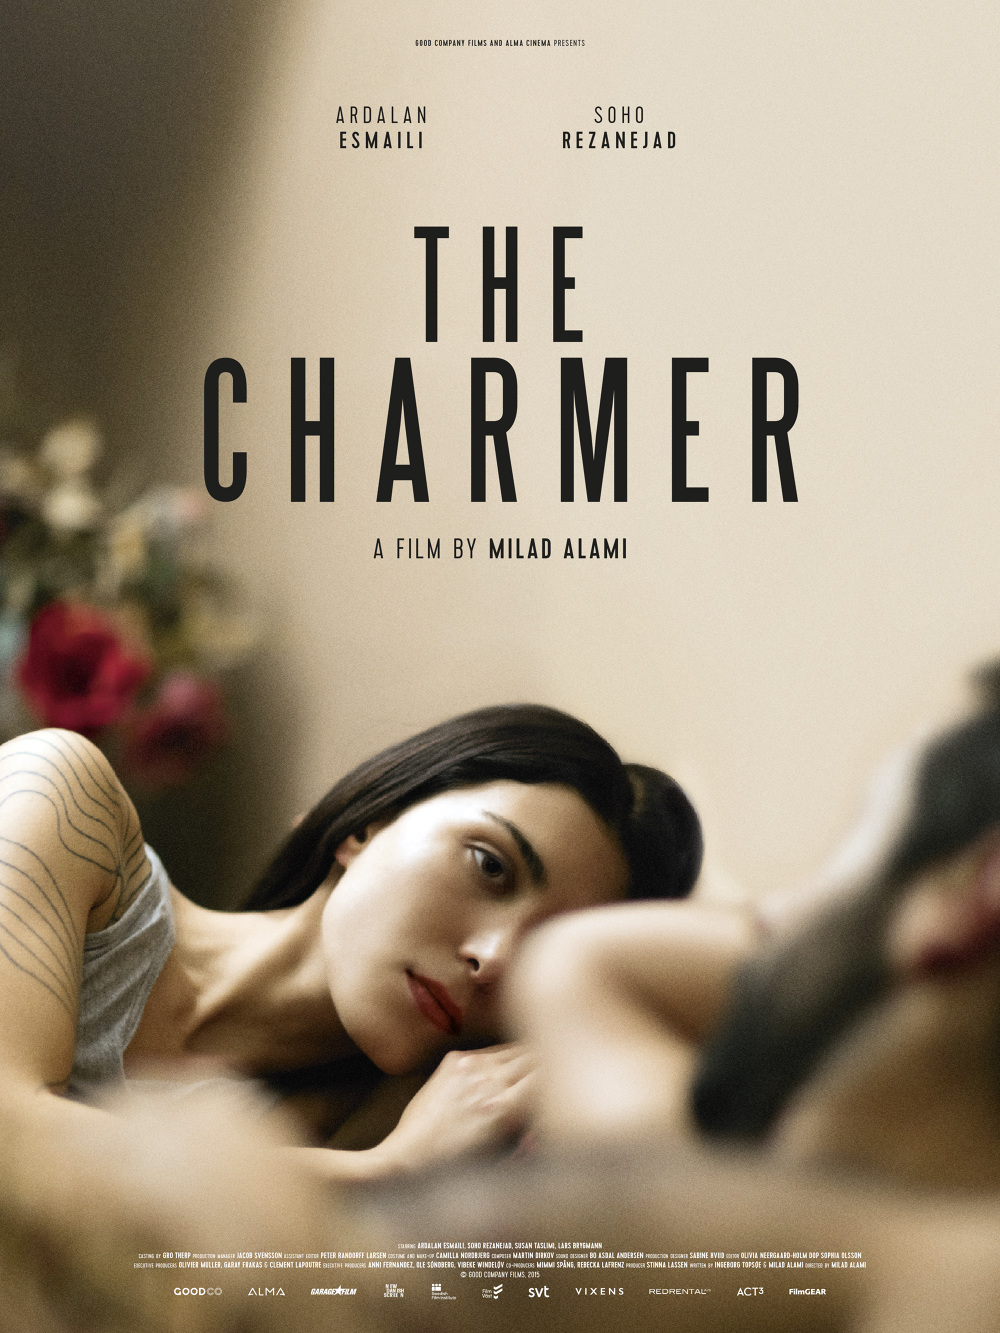 The charmer